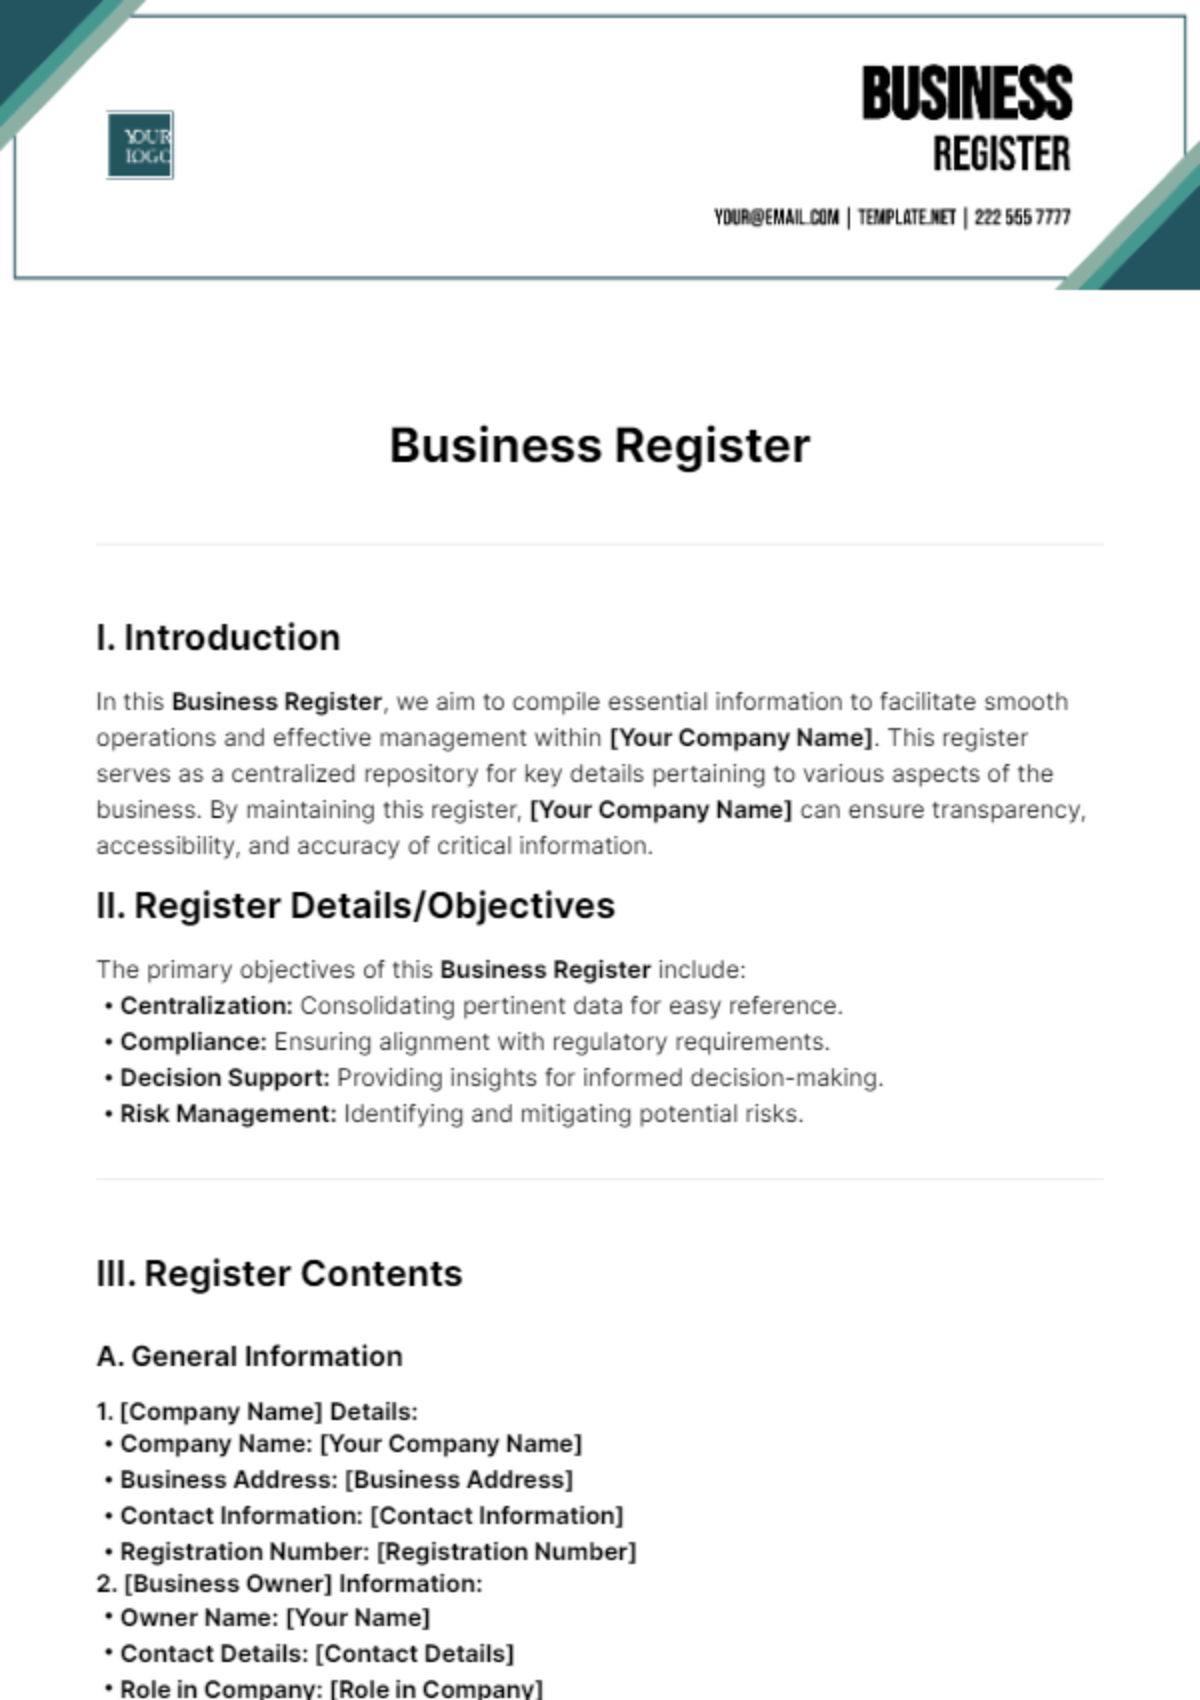 Business Register Template